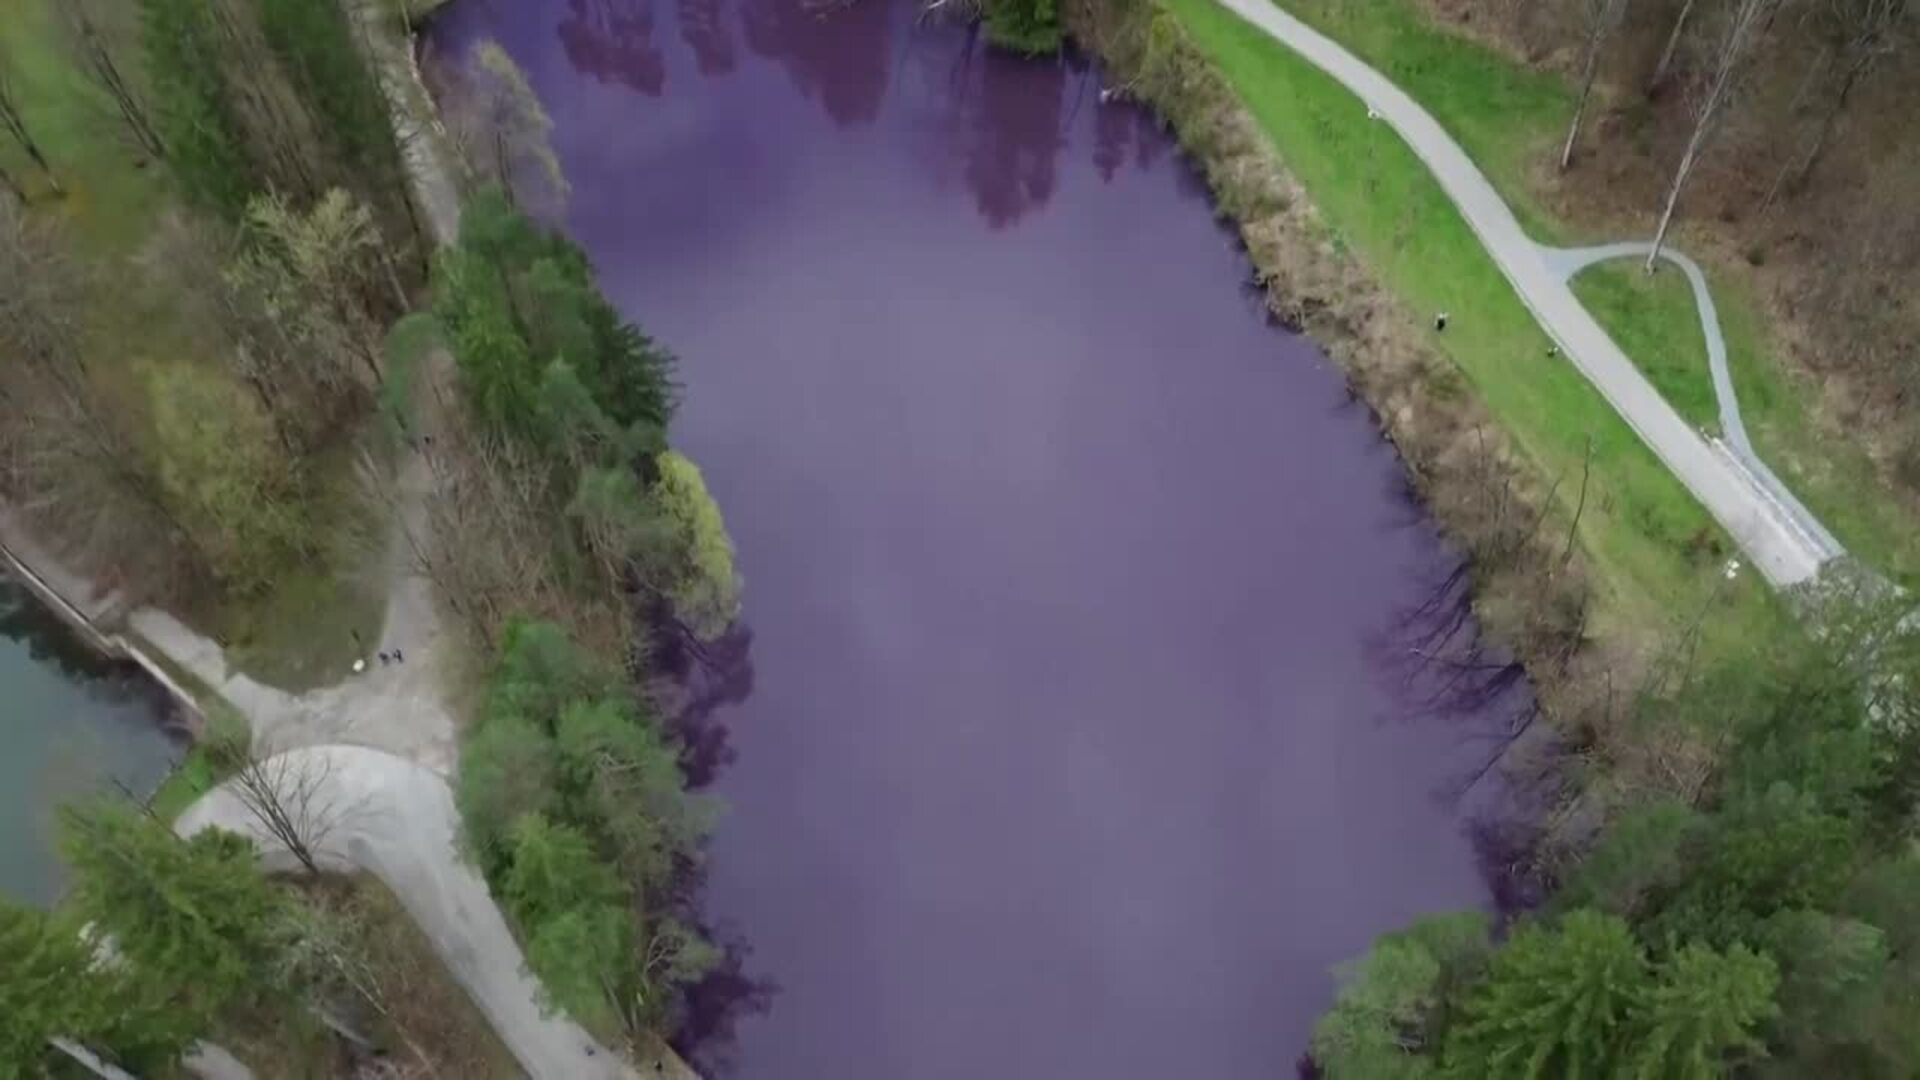 WATCH: German lake turns deep purple